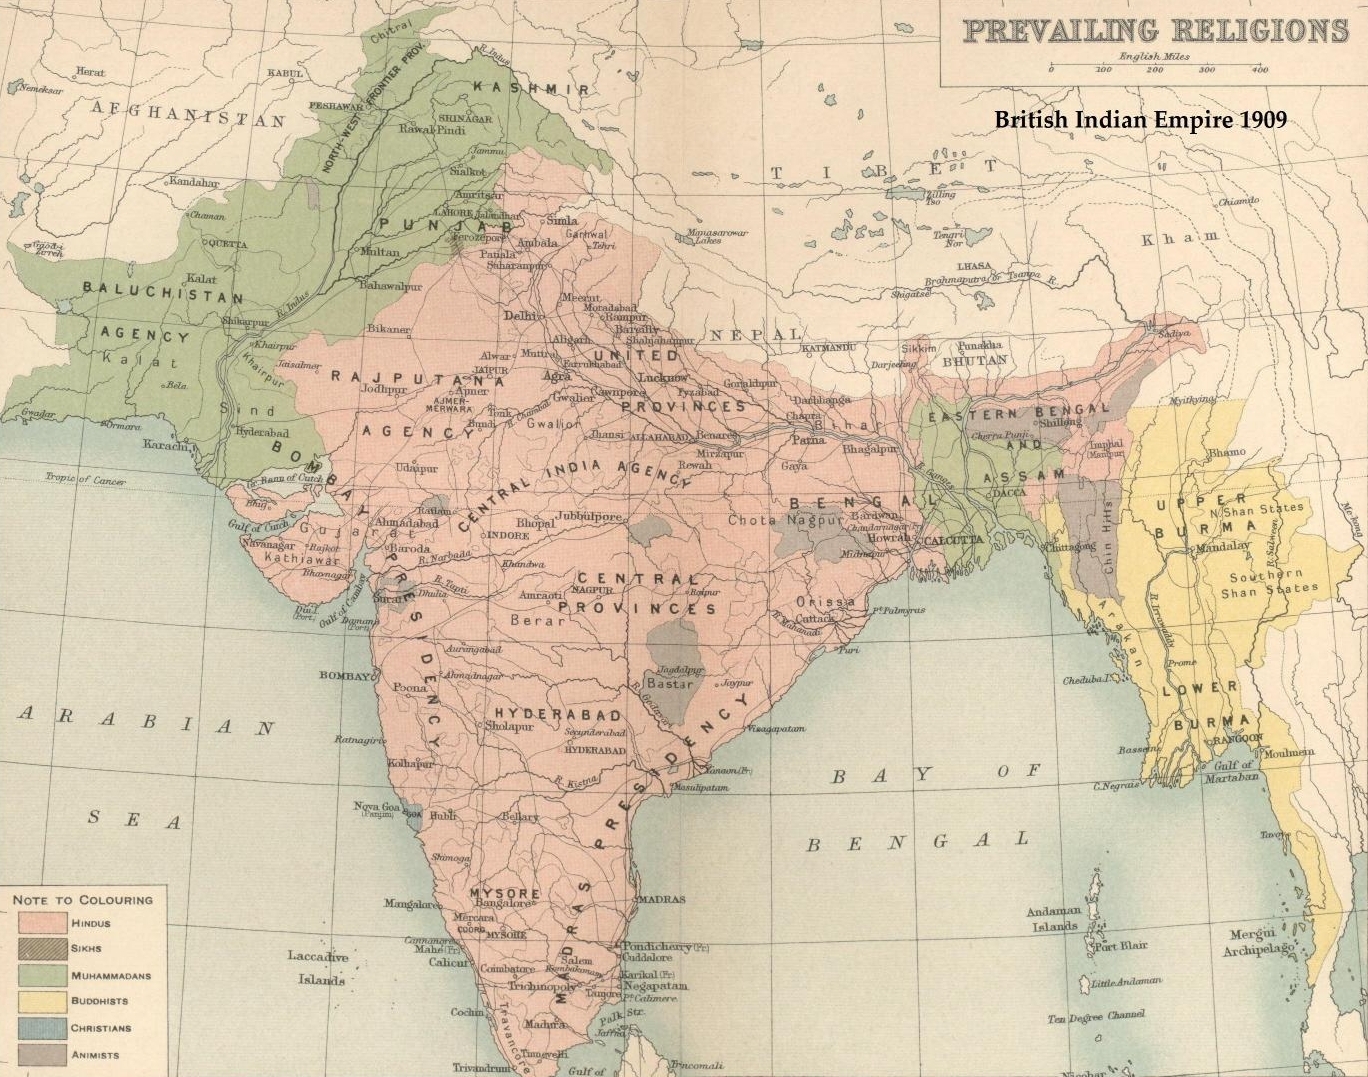 India_religion_map_1909_en.jpg